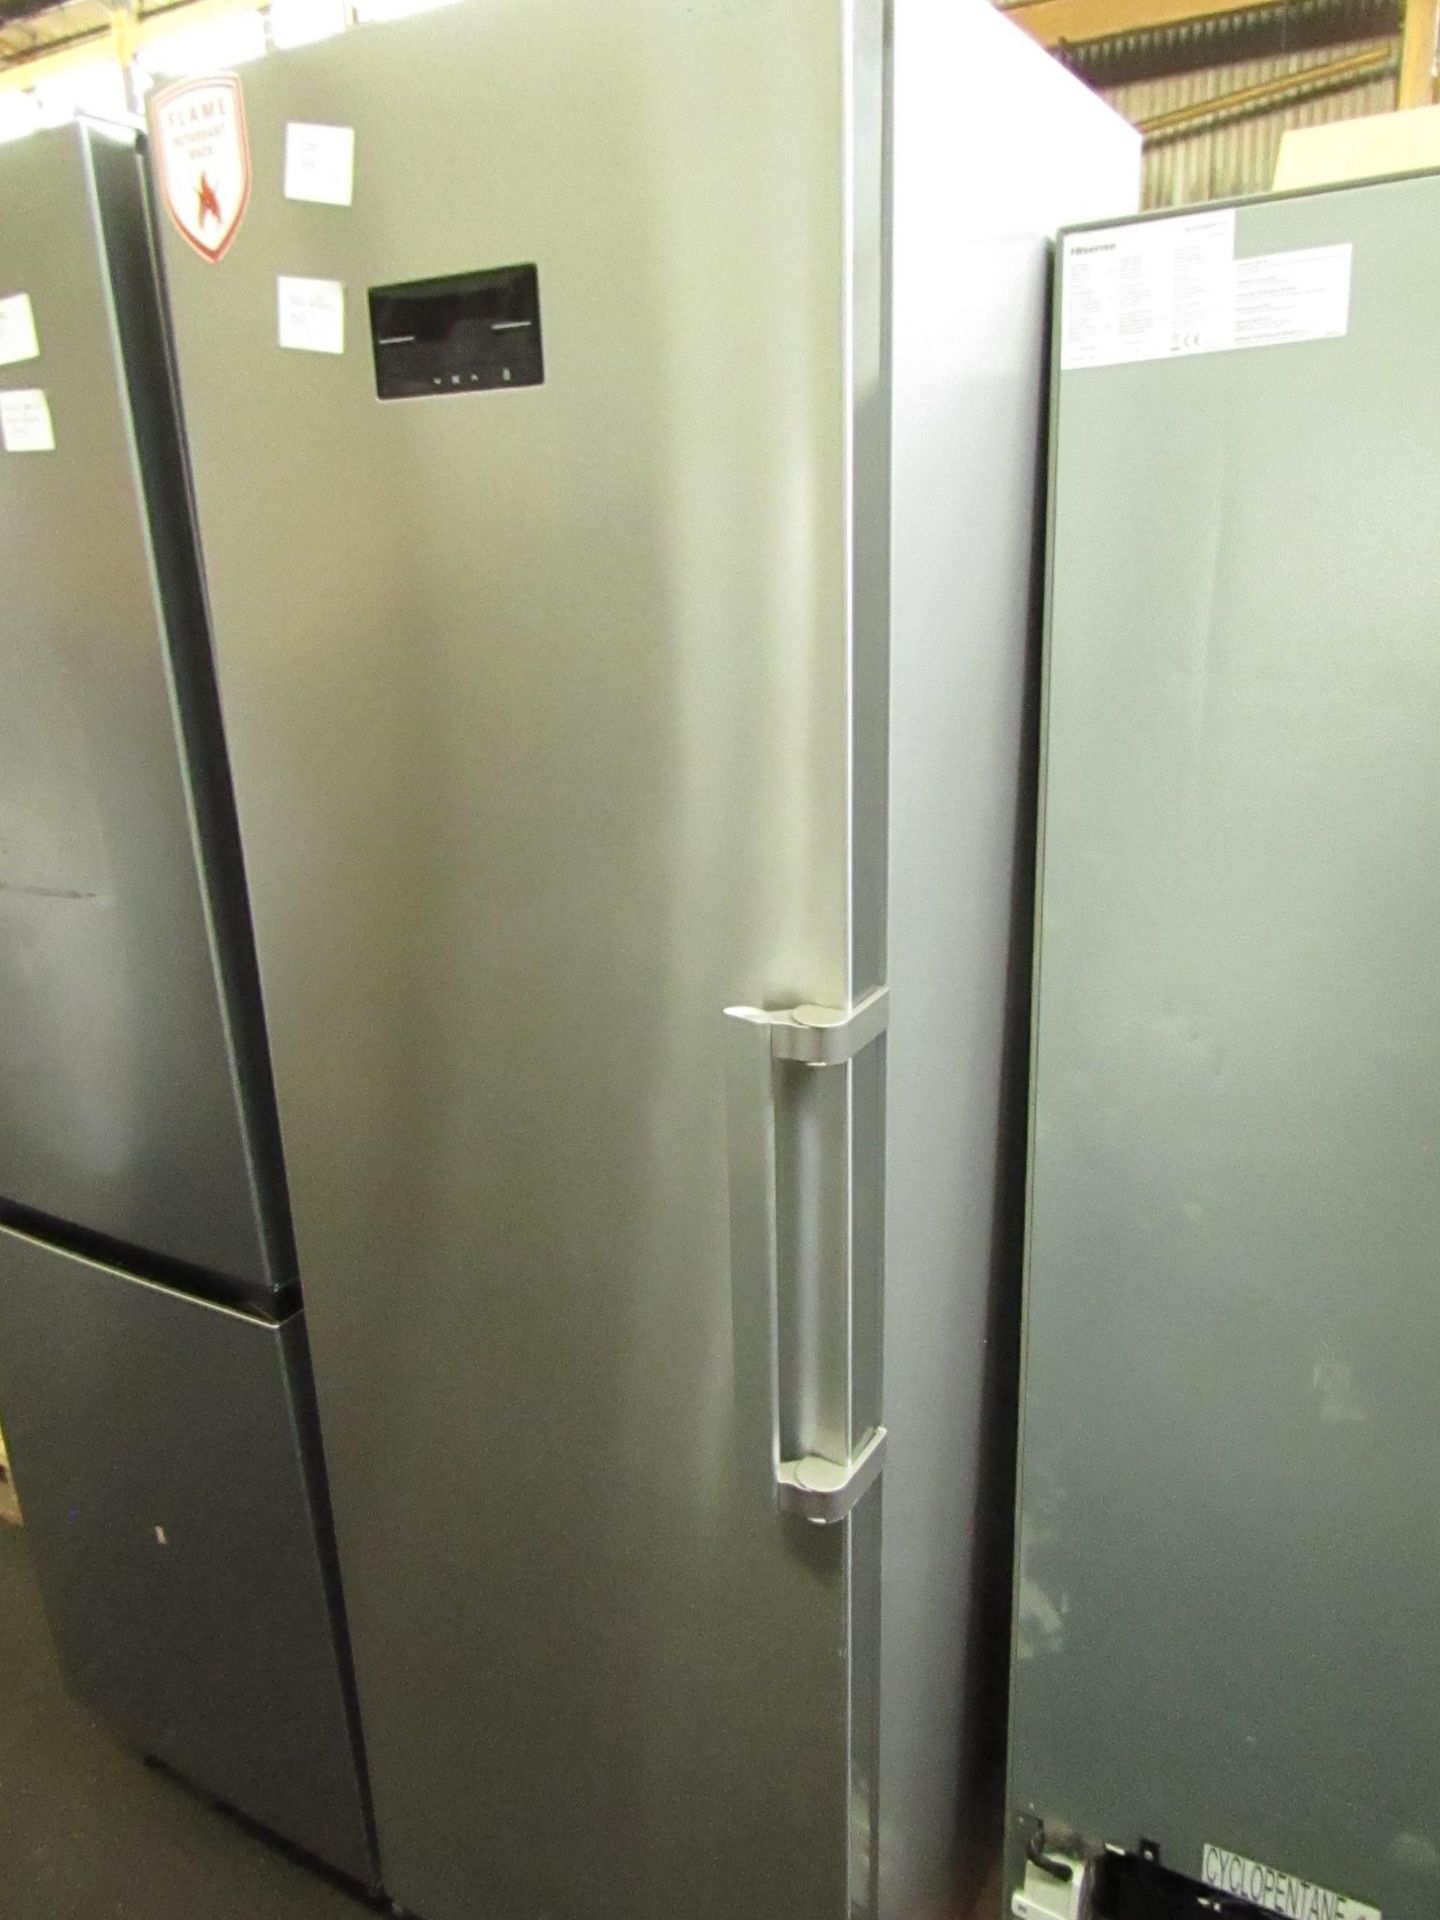 Sharp freestanding tall freezer, not getting cold